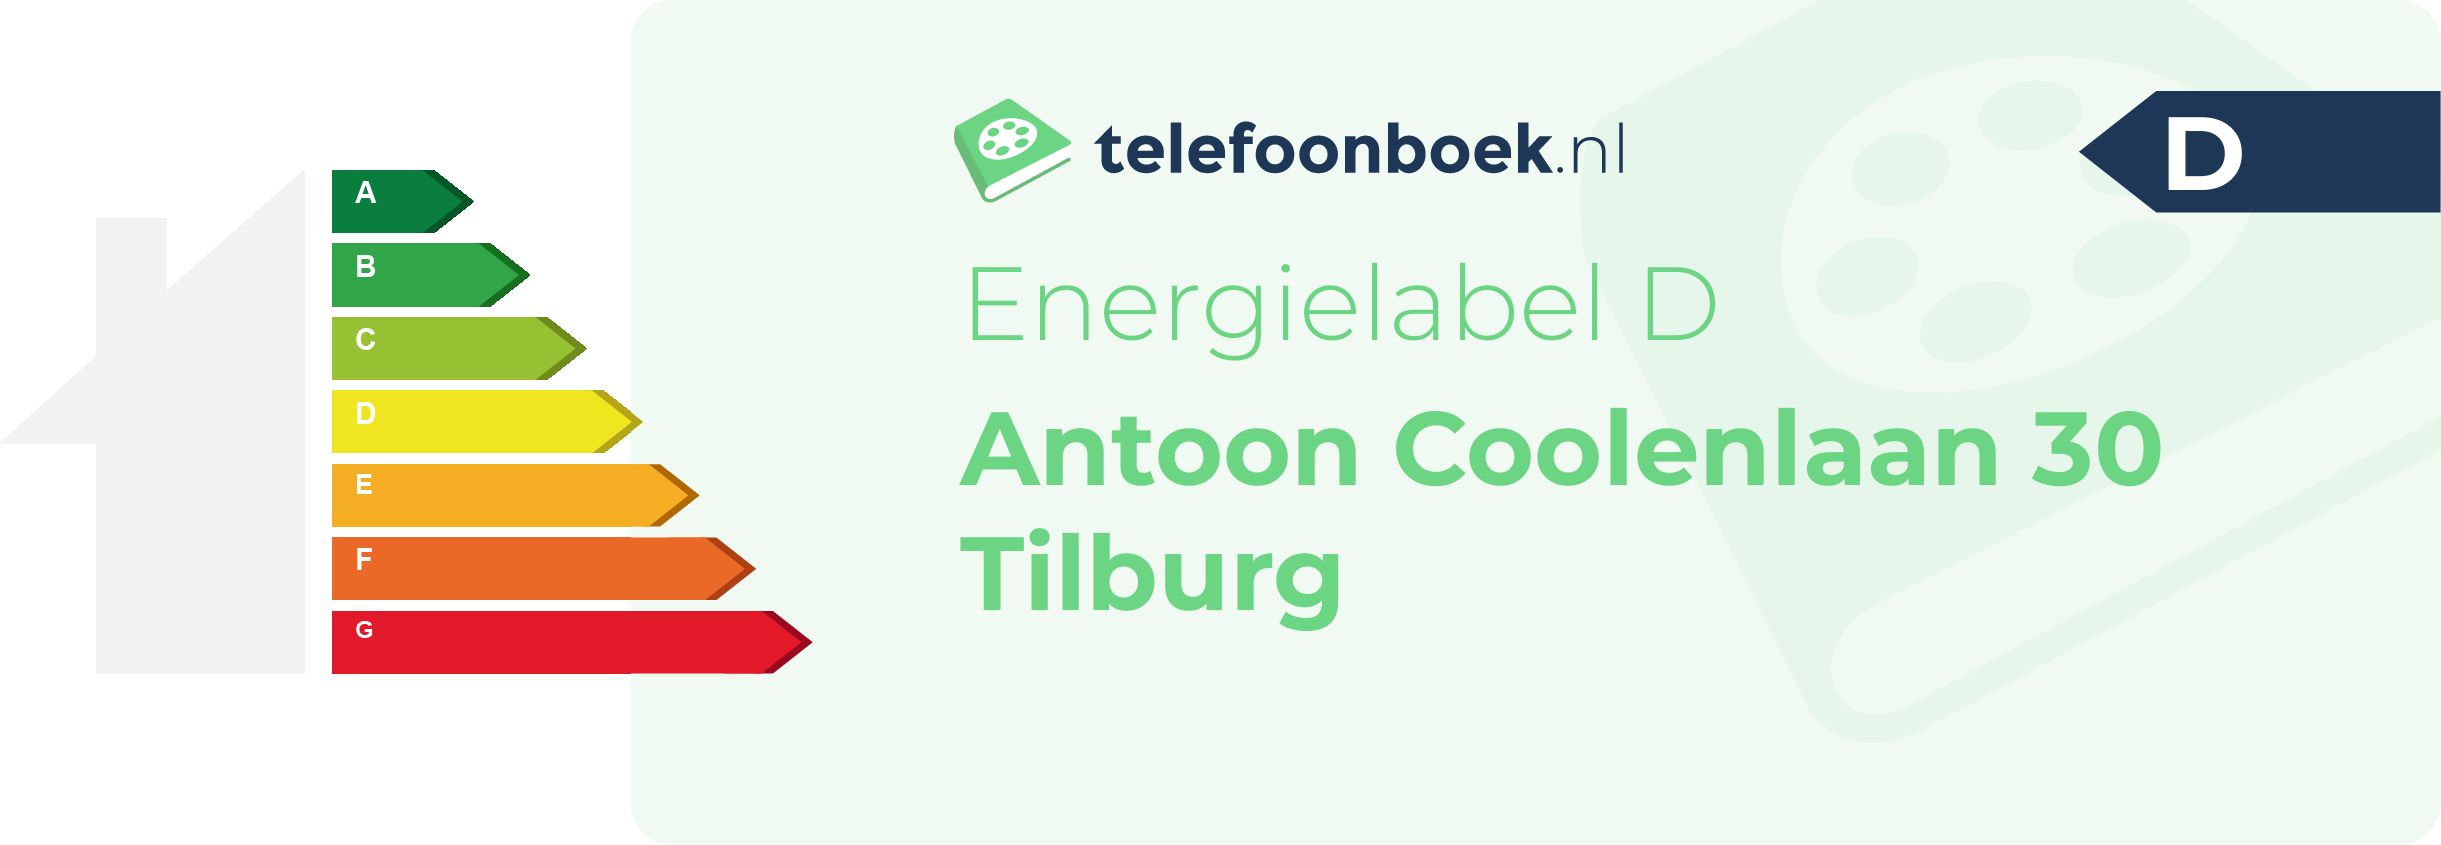 Energielabel Antoon Coolenlaan 30 Tilburg